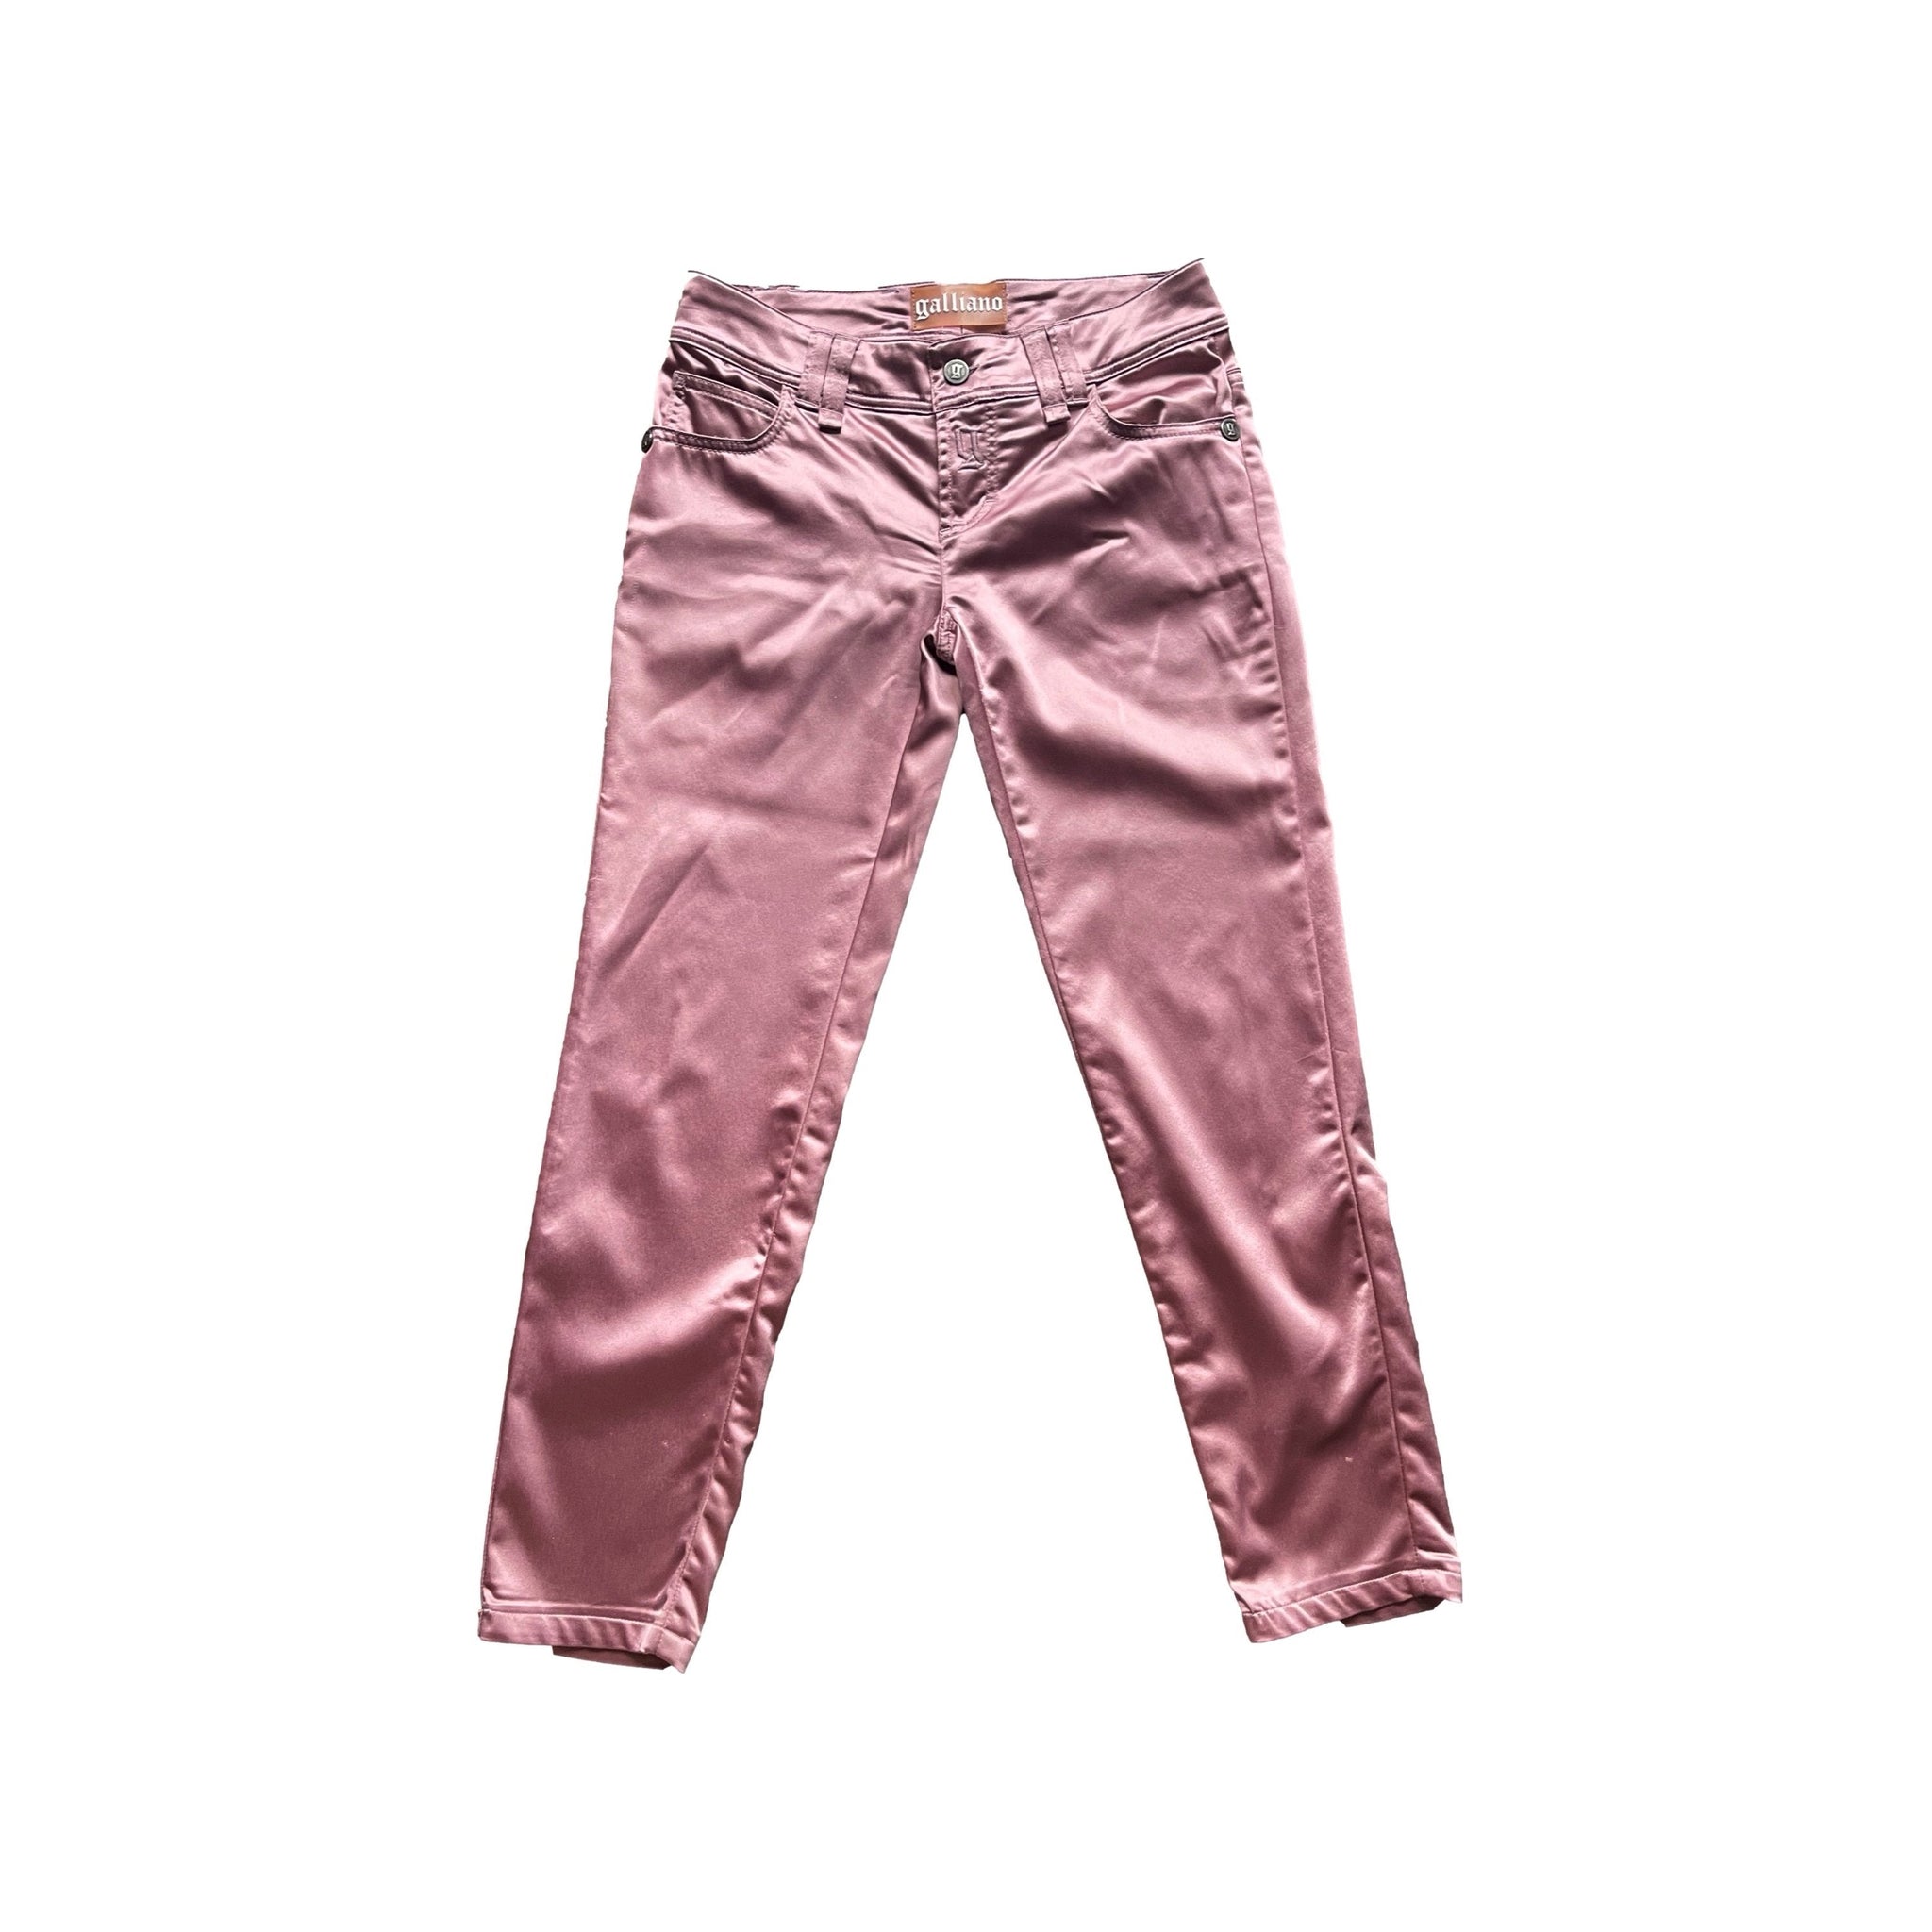 Galliano Pink Satin Pants